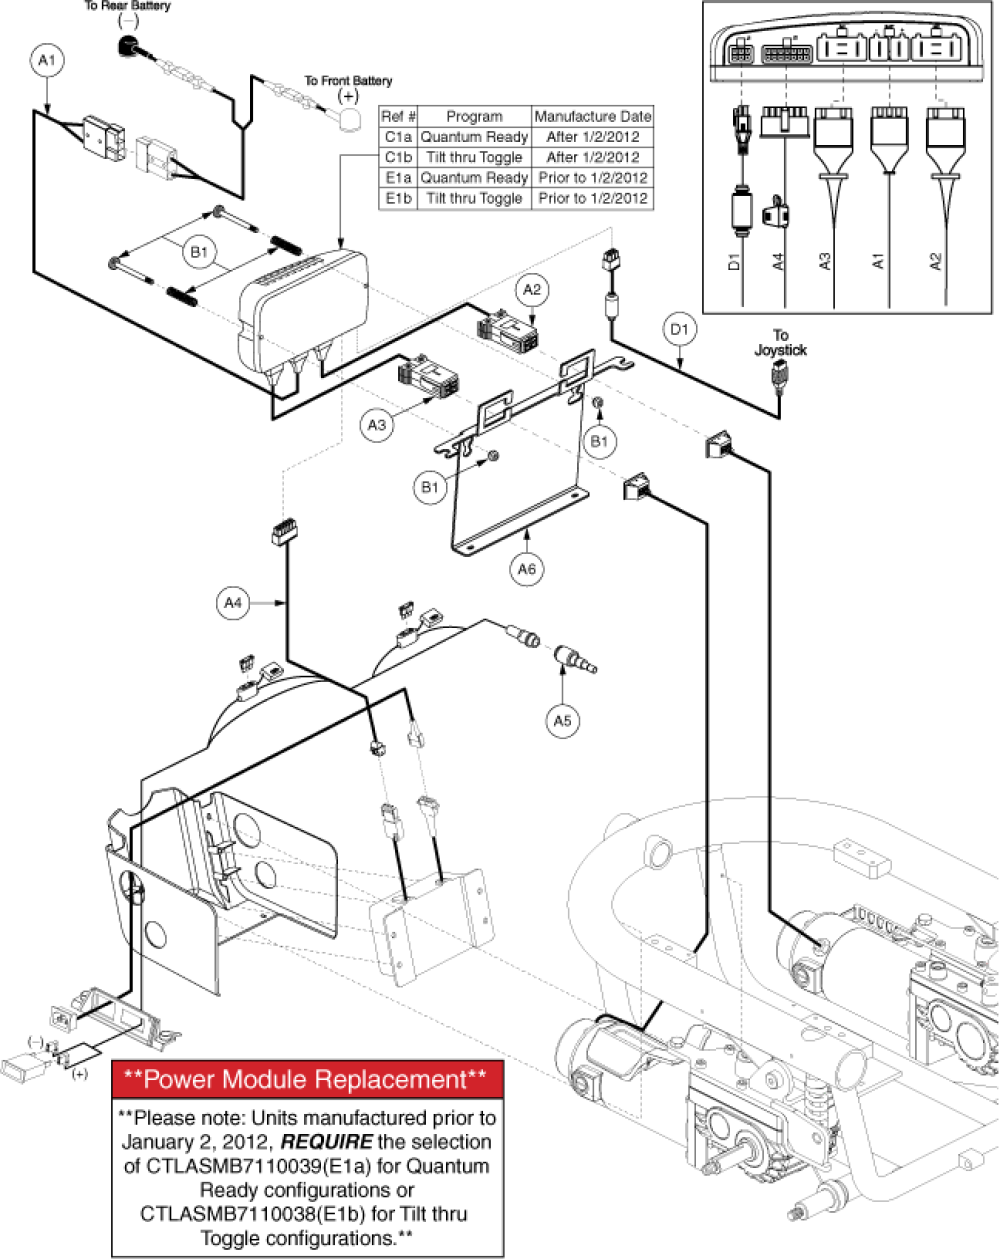 Electronics Assembly - Qlogic, Tilt Thru Toggle parts diagram